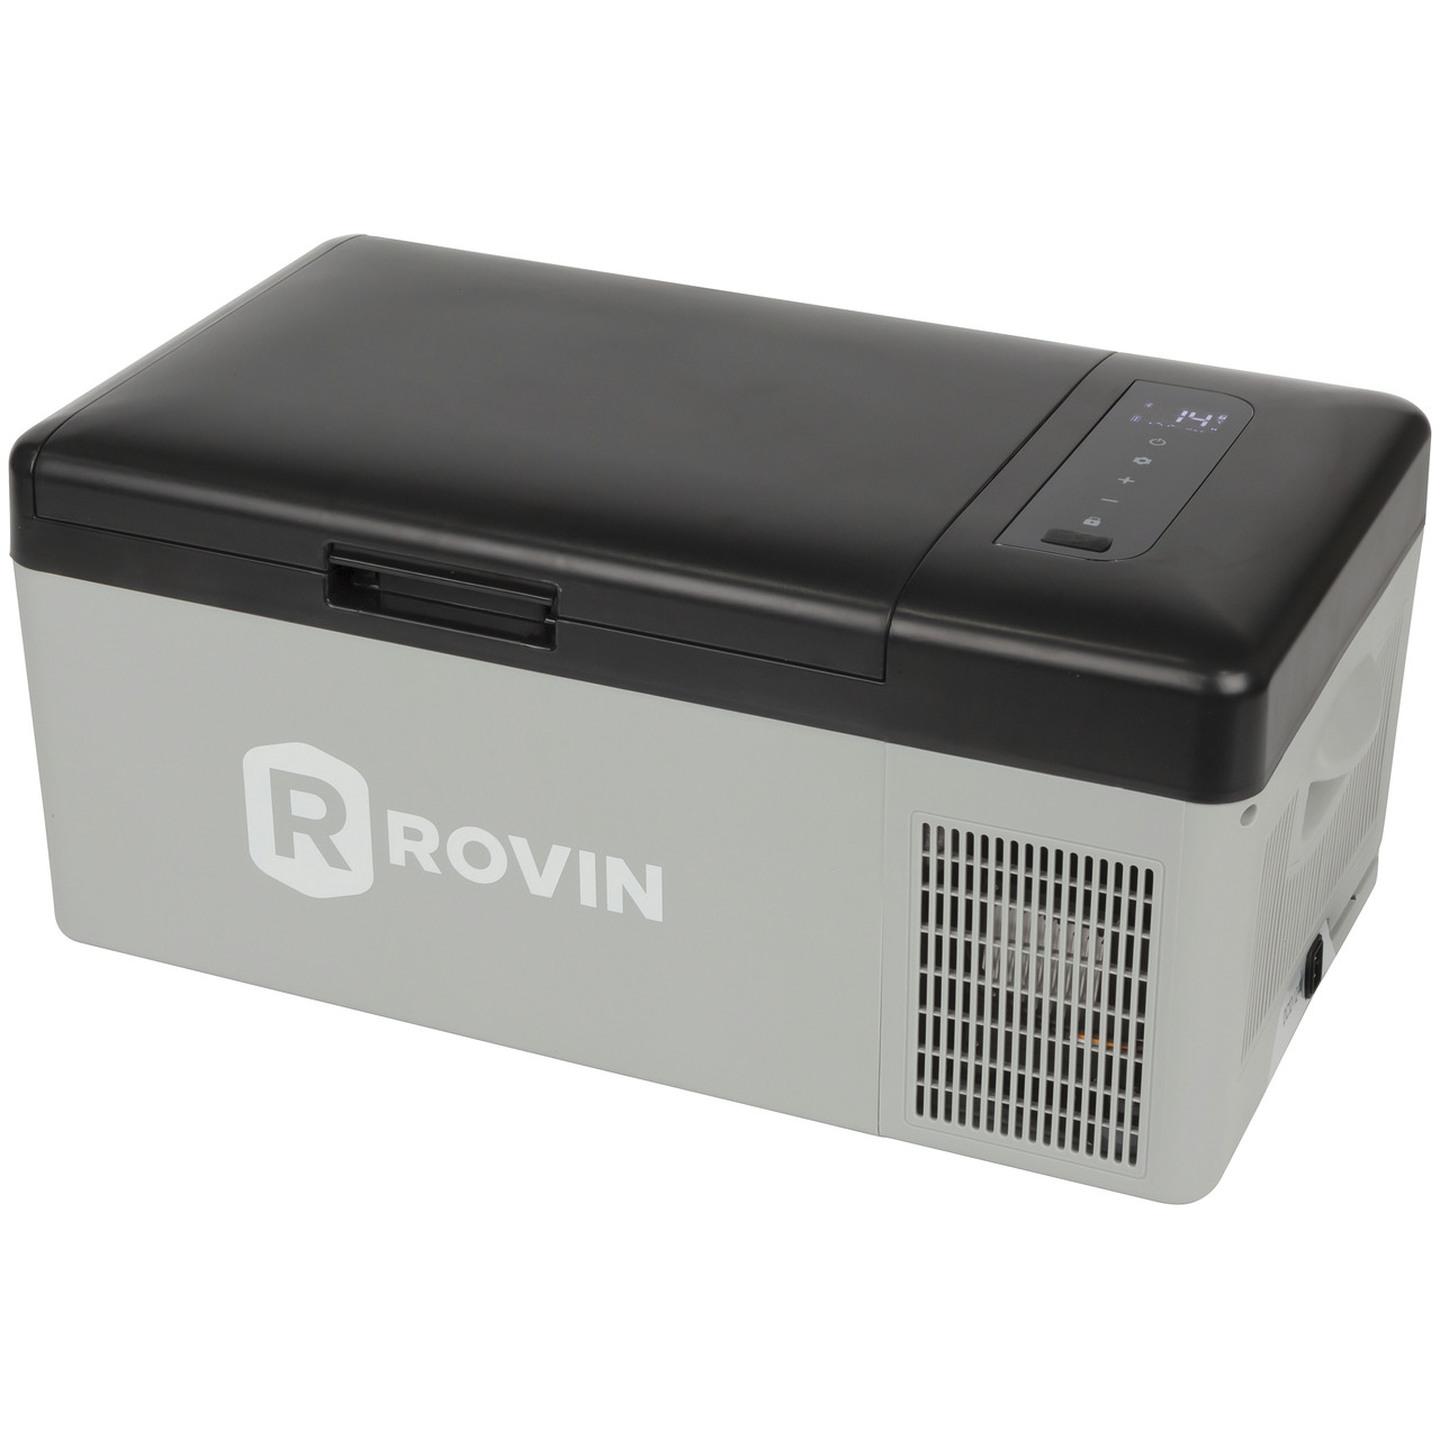 15L Rovin Portable Fridge with Mobile App Control